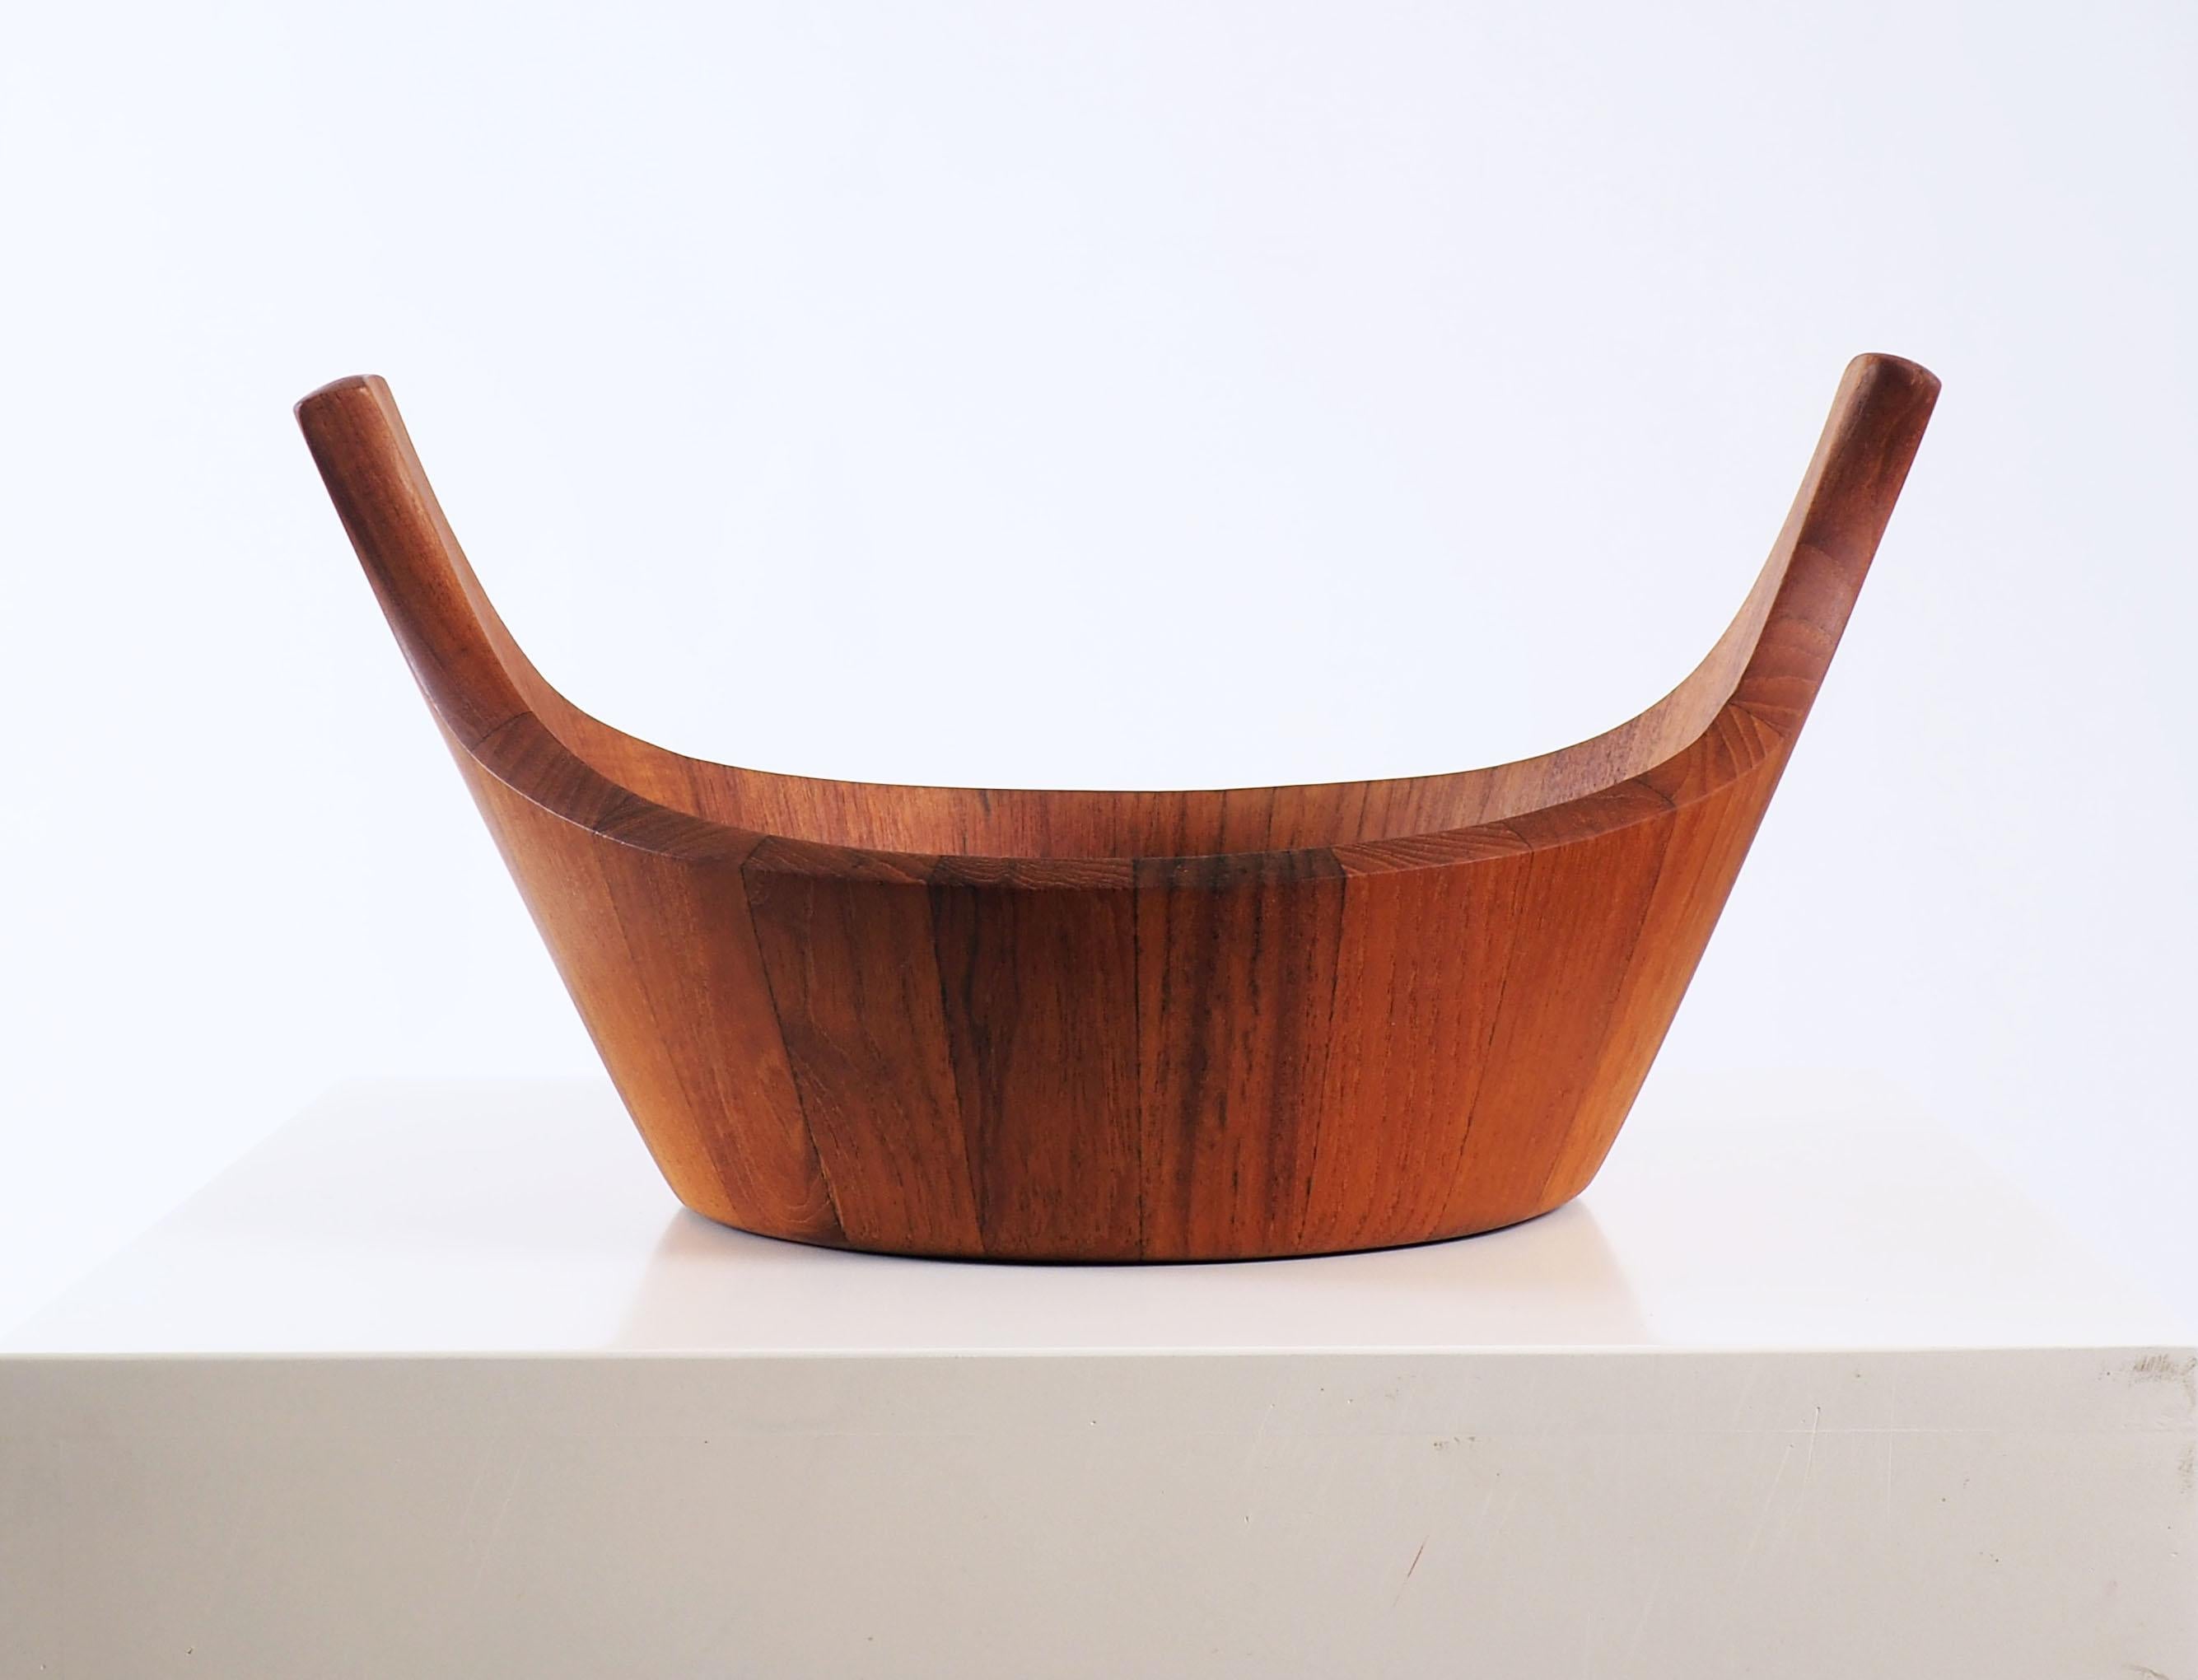 Scandinavian Modern Staved Teak Bowl by the Danish designer Jens Harald Quistgaard For Sale